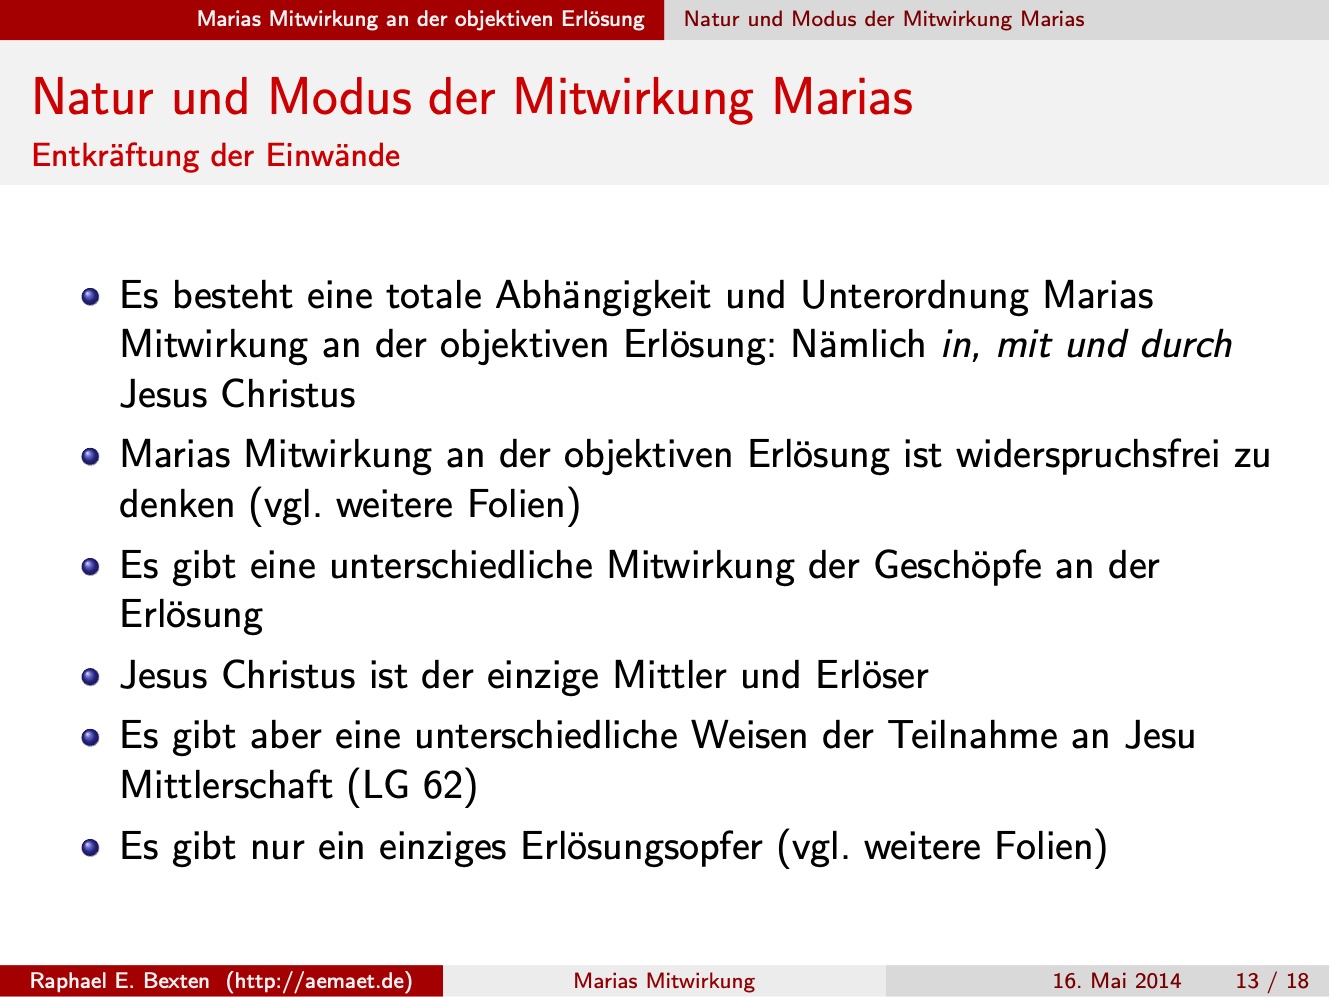 Marias_Mitwirkung_Bexten Kopie 3.pdf-13